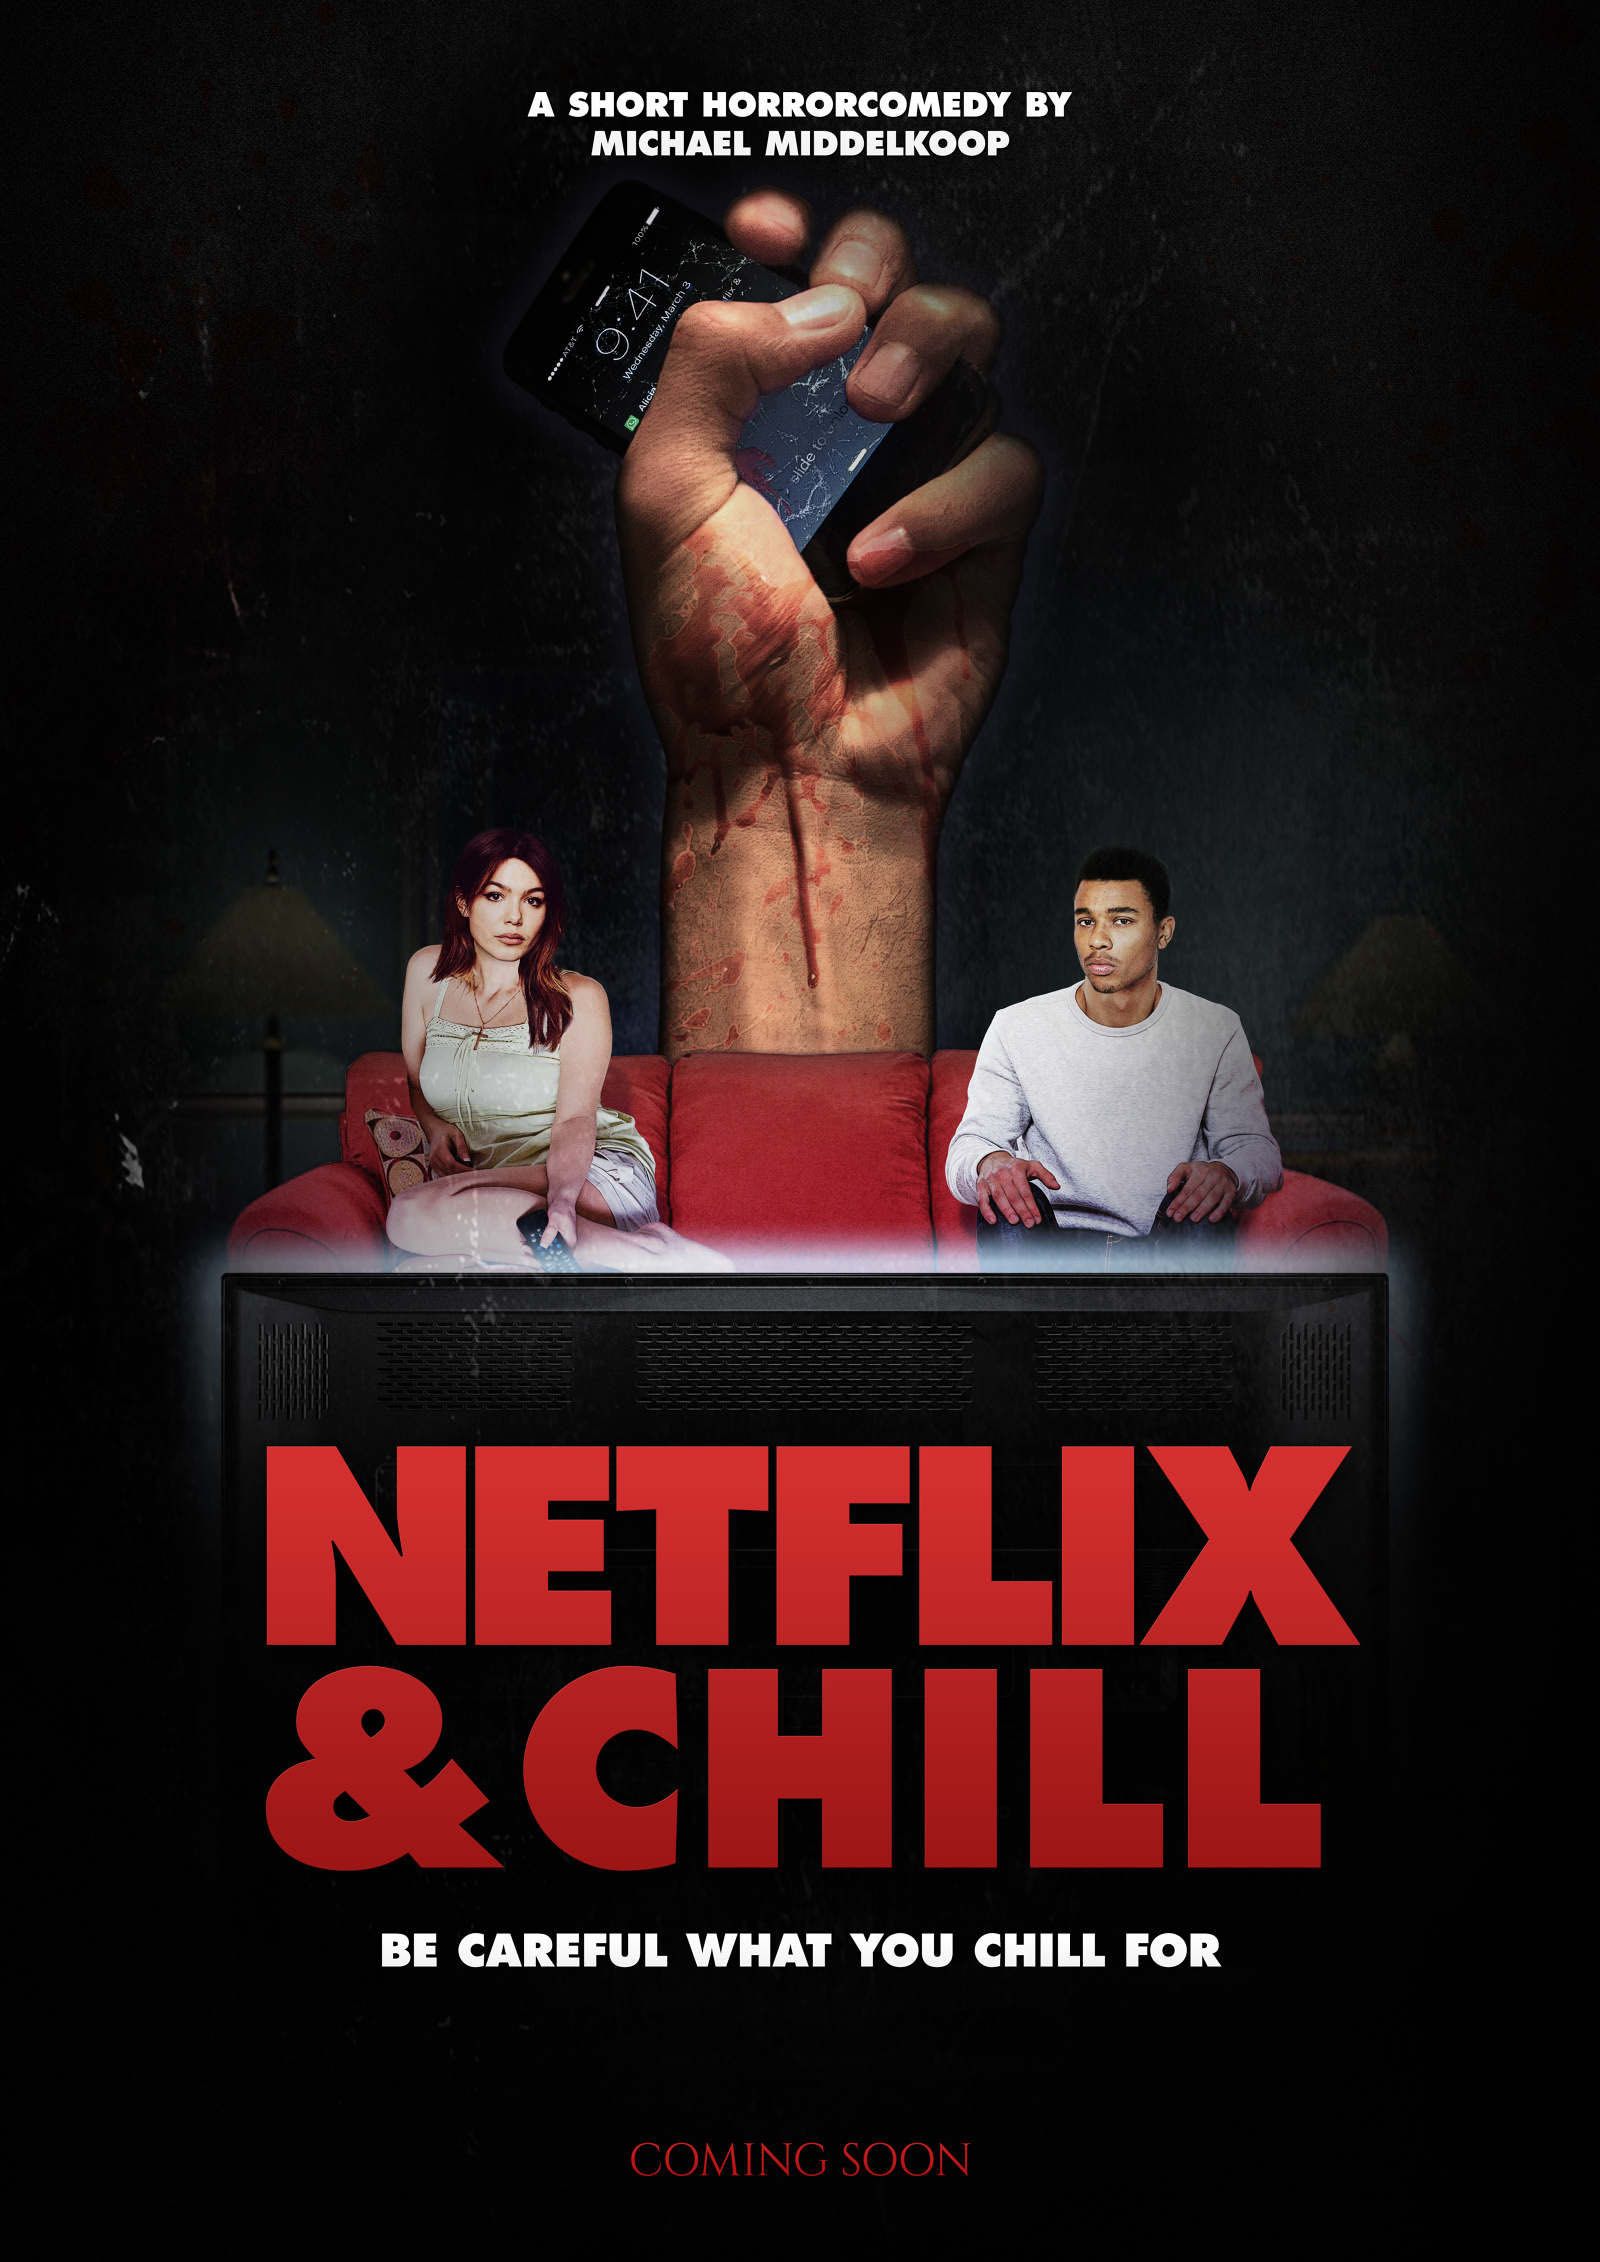 Netflix And Chill Short Horror Movie In Development